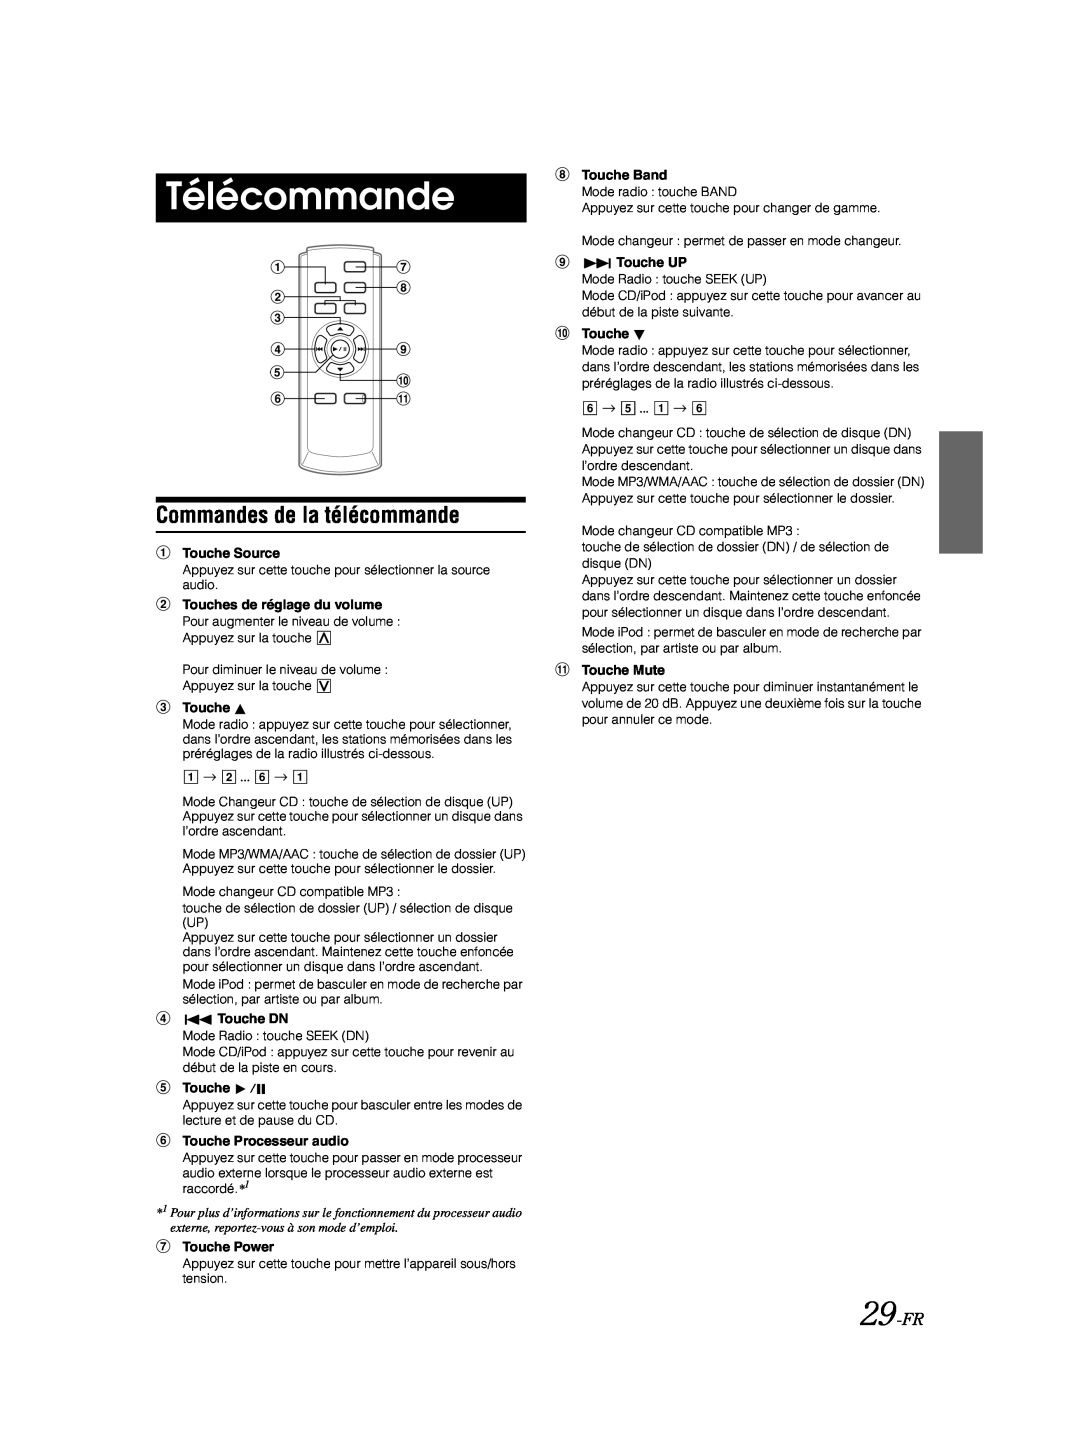 Alpine CDA-9885 owner manual Télécommande, Commandes de la télécommande, 29-FR 